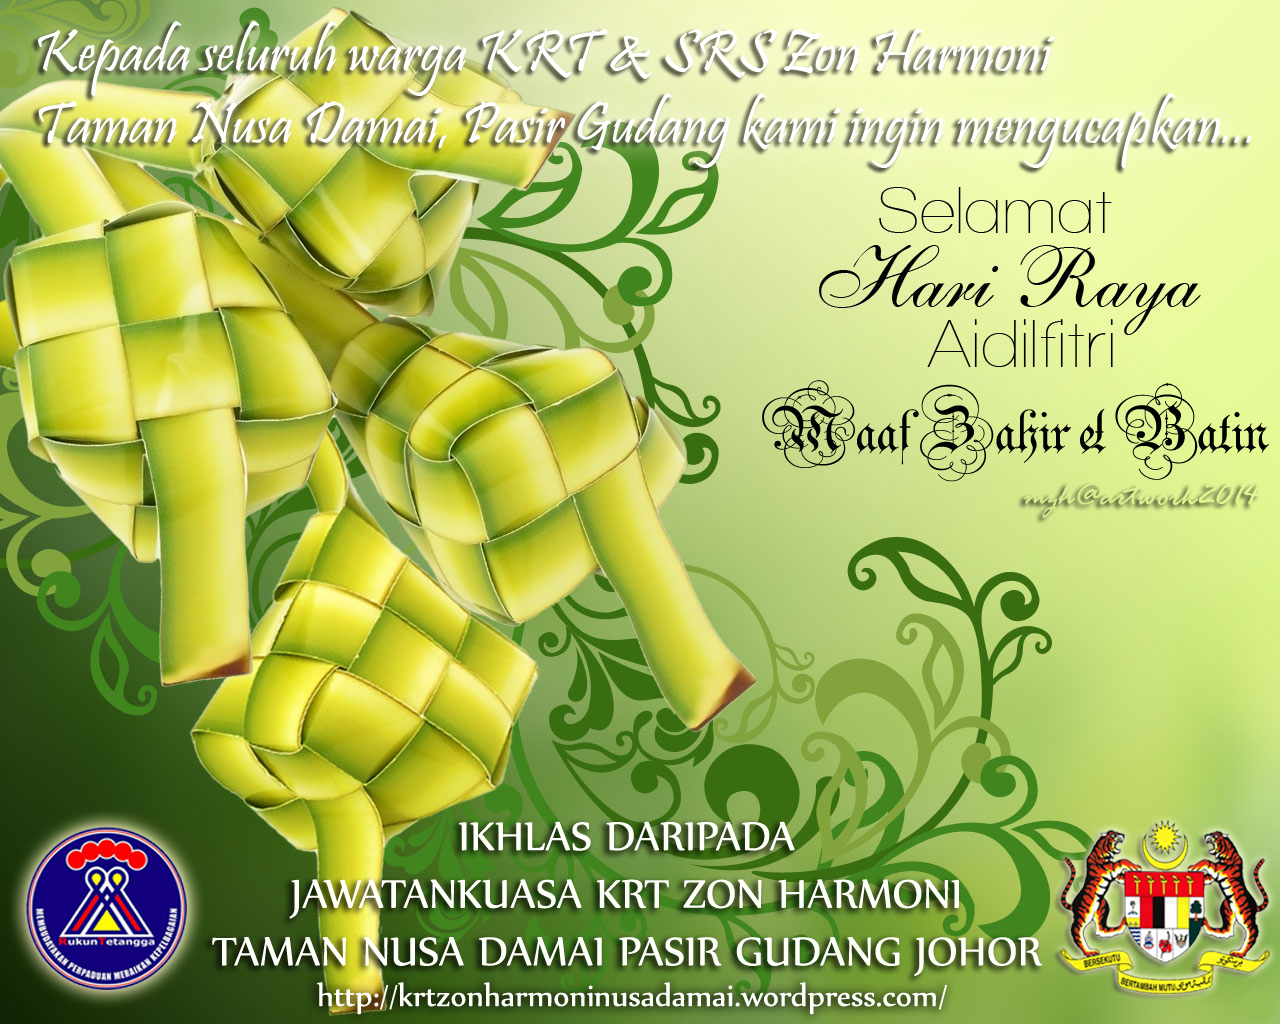 Selamat Hari Raya Aidilfitri 2014 Krt Zon Harmoni Taman Nusa Damai